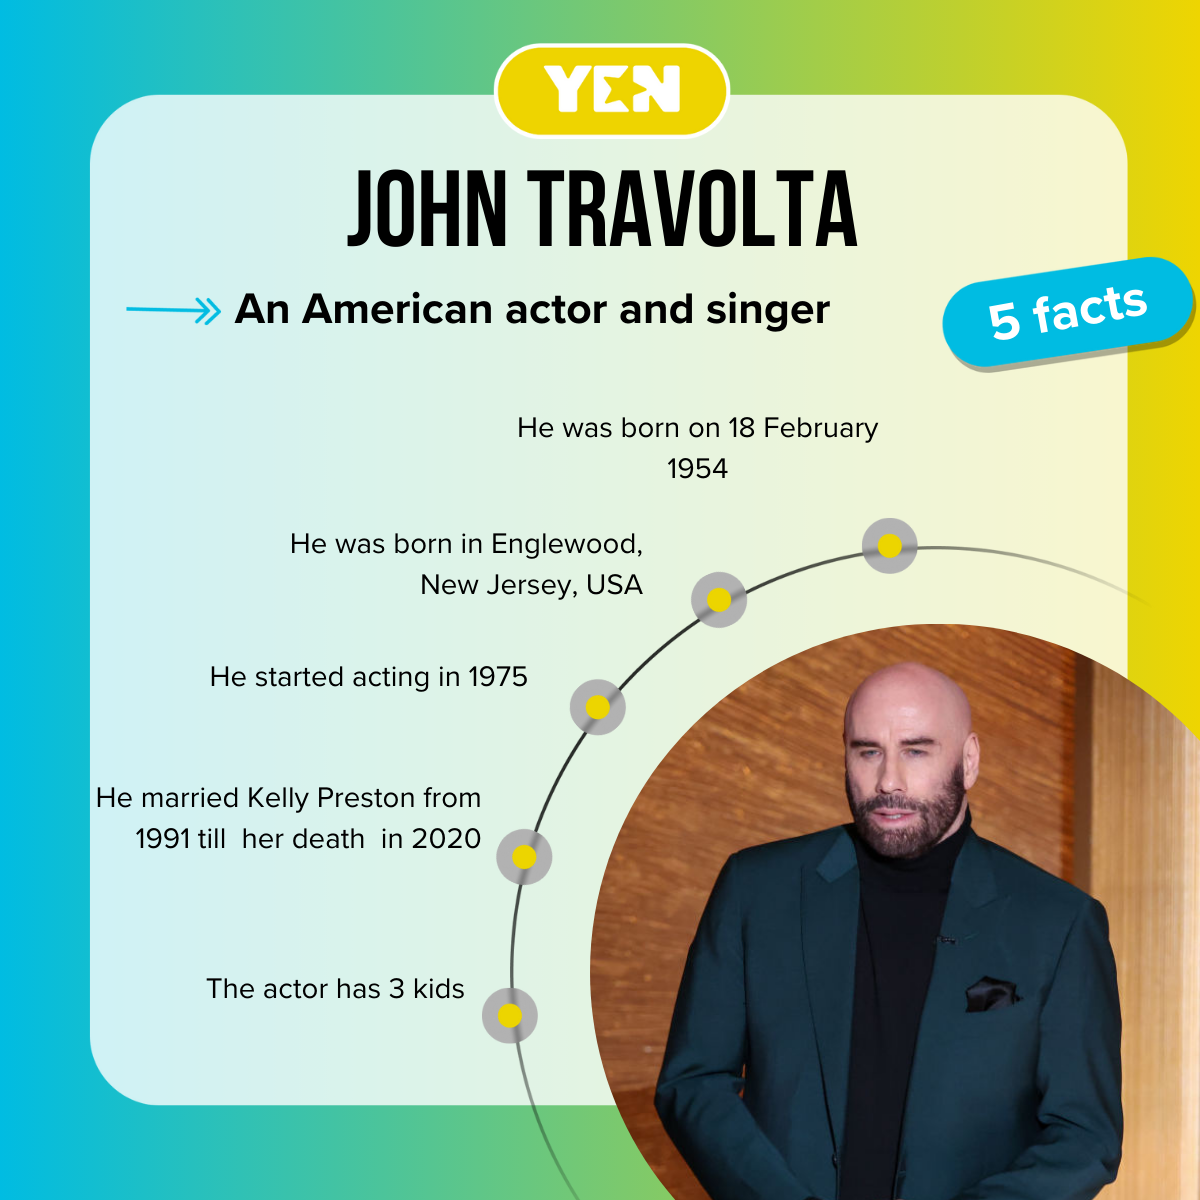 Facts about John Travolta